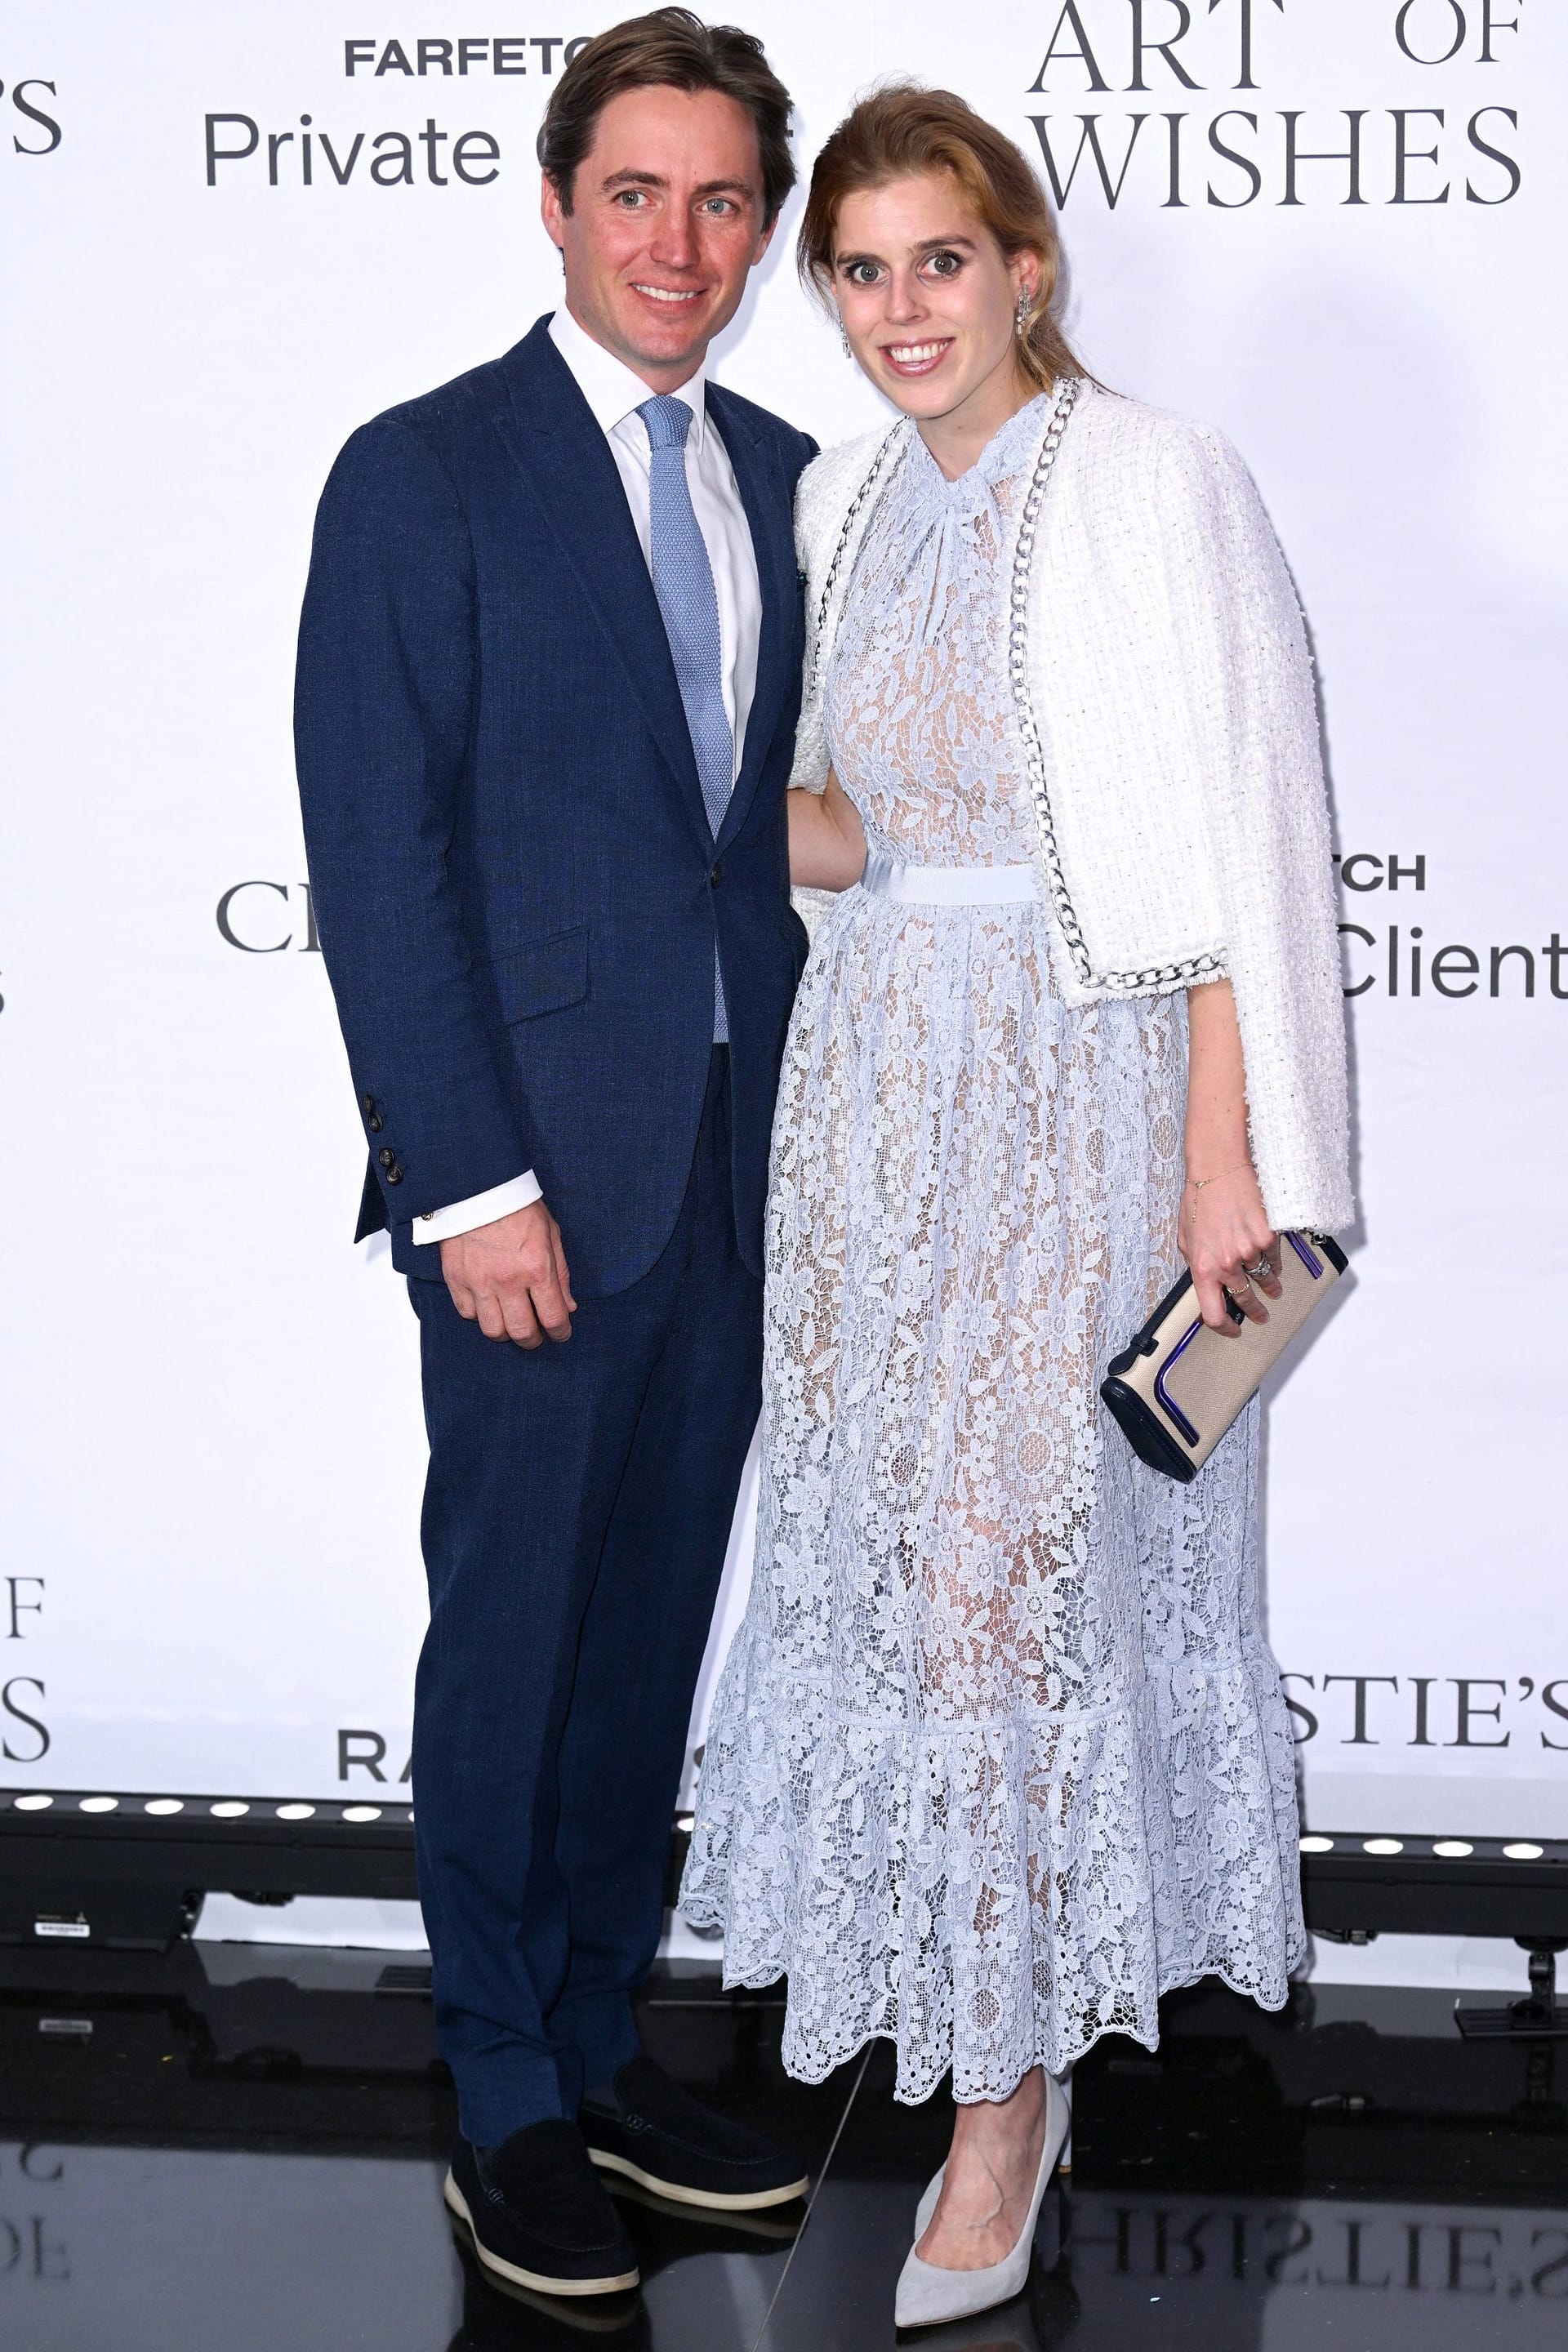 Prinzessin Beatrice and Edoardo Mapelli Mozzi Arm in Arm bei der Art of Wishes Gala.